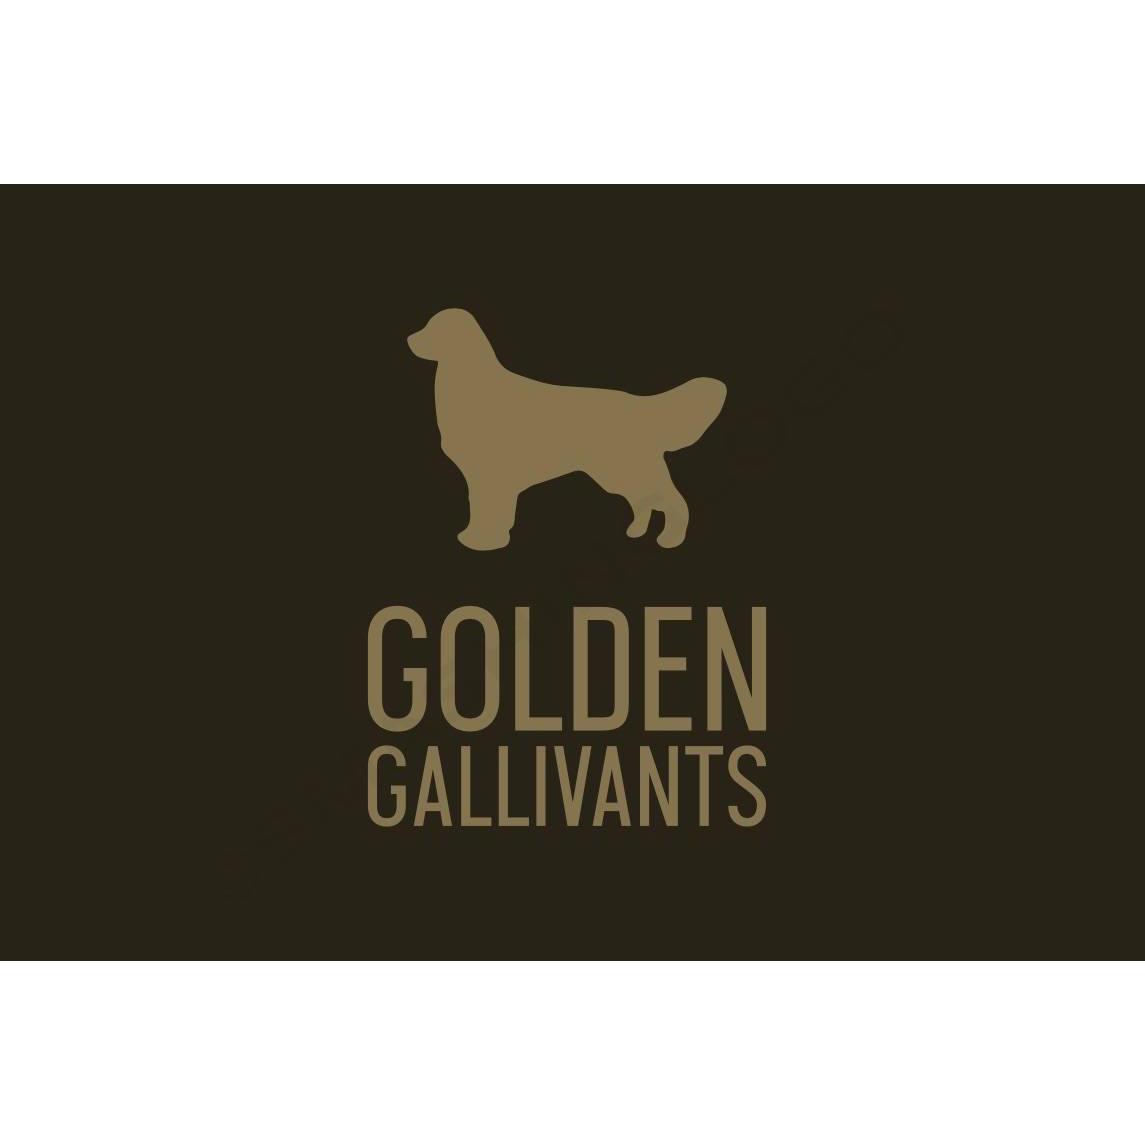 LOGO Golden Gallivants Catterick Garrison 07544 744905